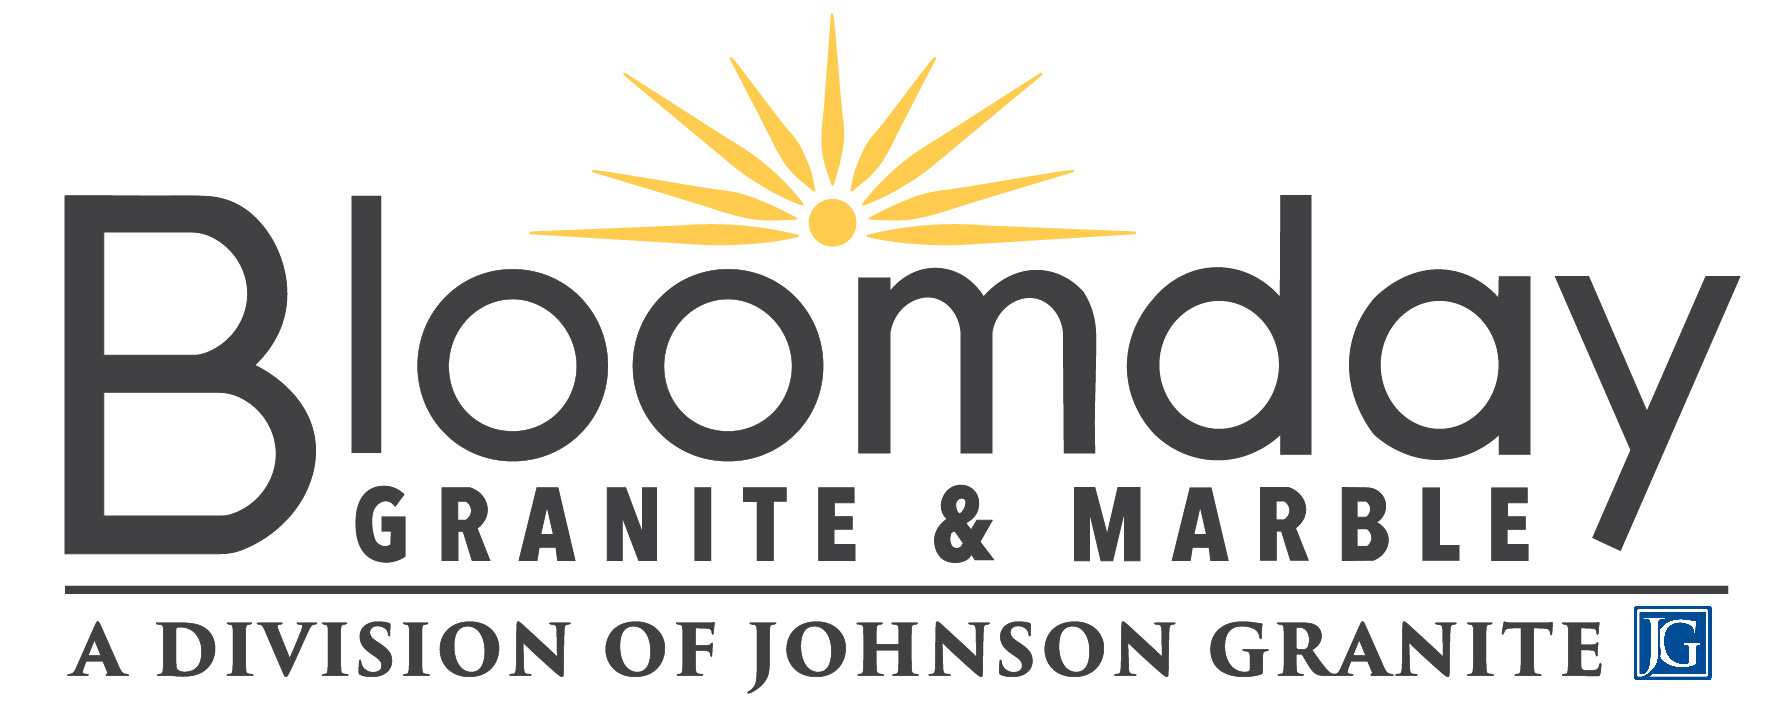 New Bloomday Logo JPEG